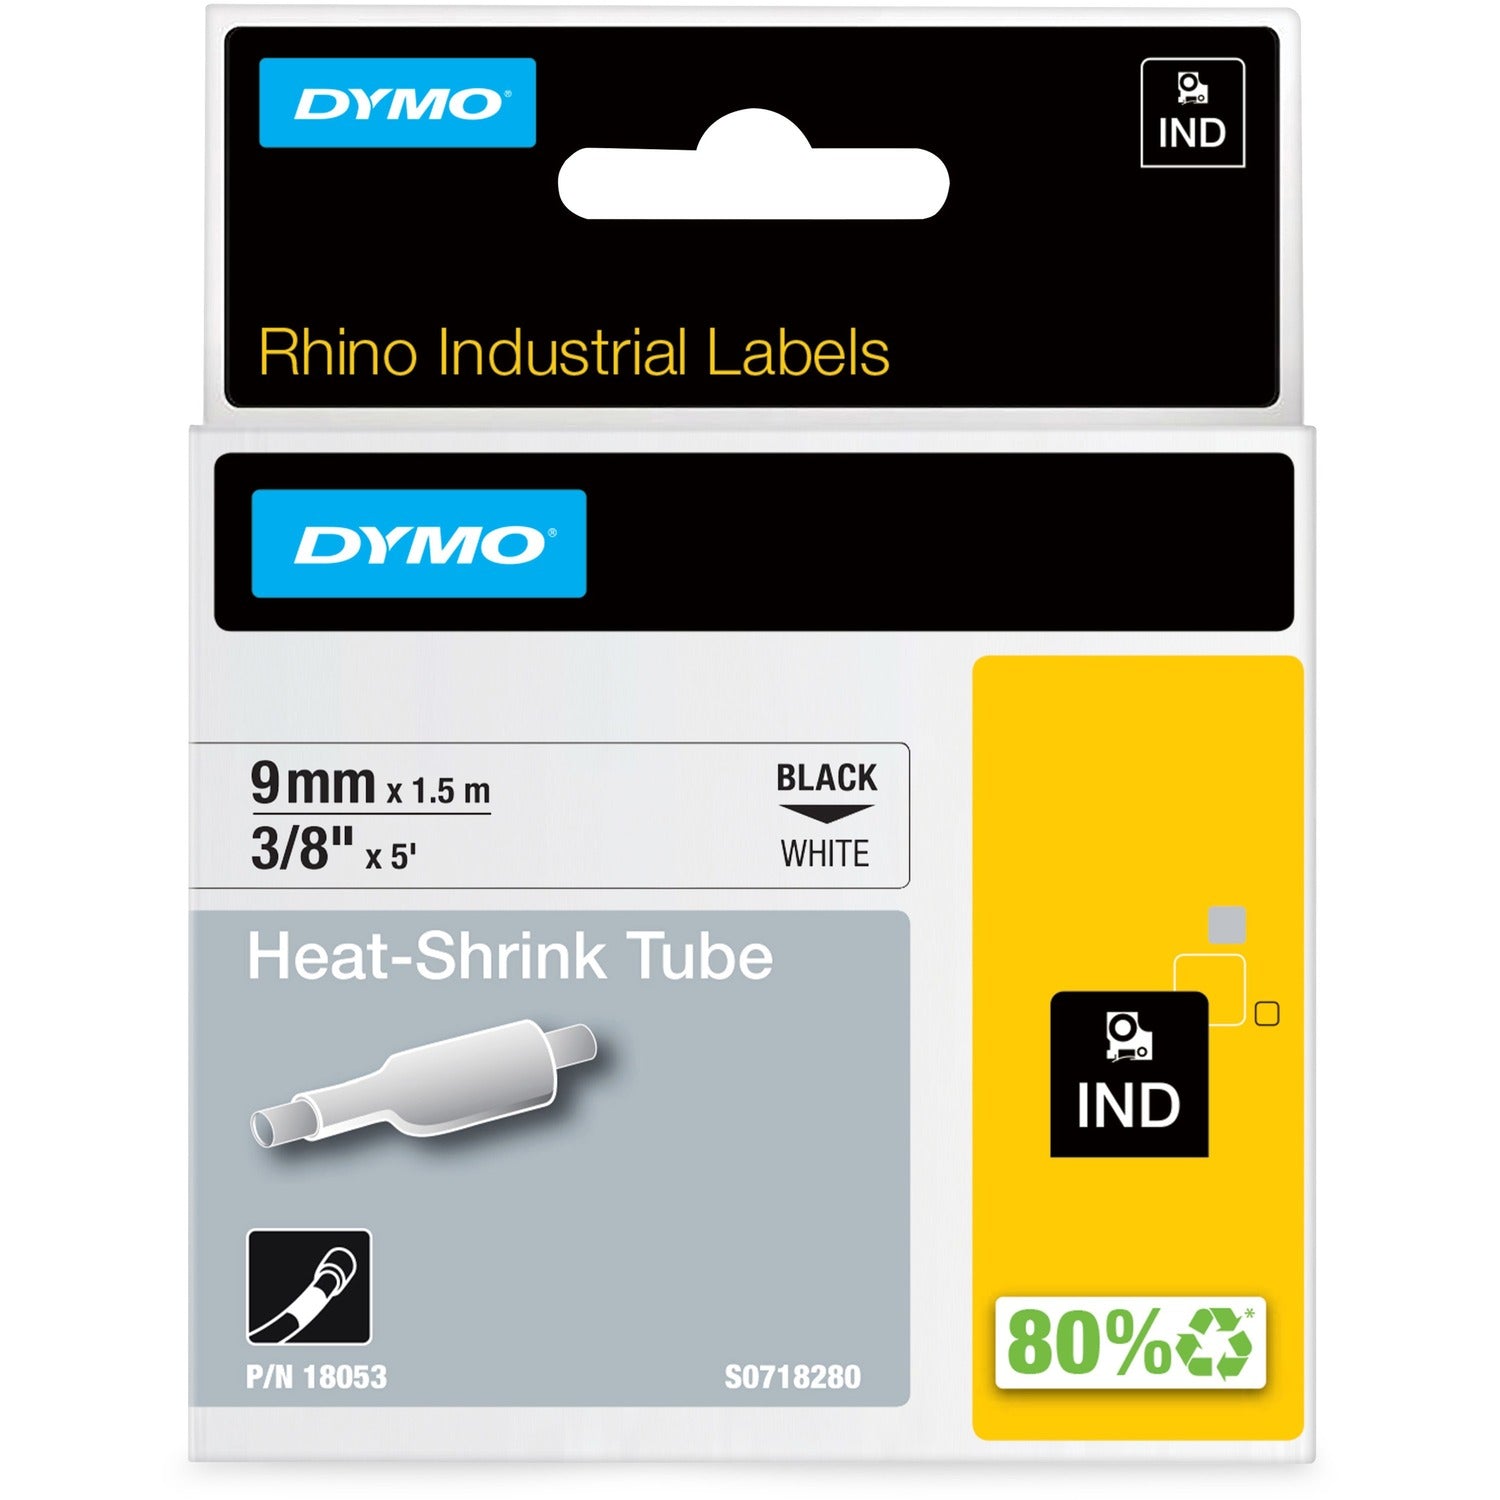 Rhino Heat Shrink Tube Label 18053